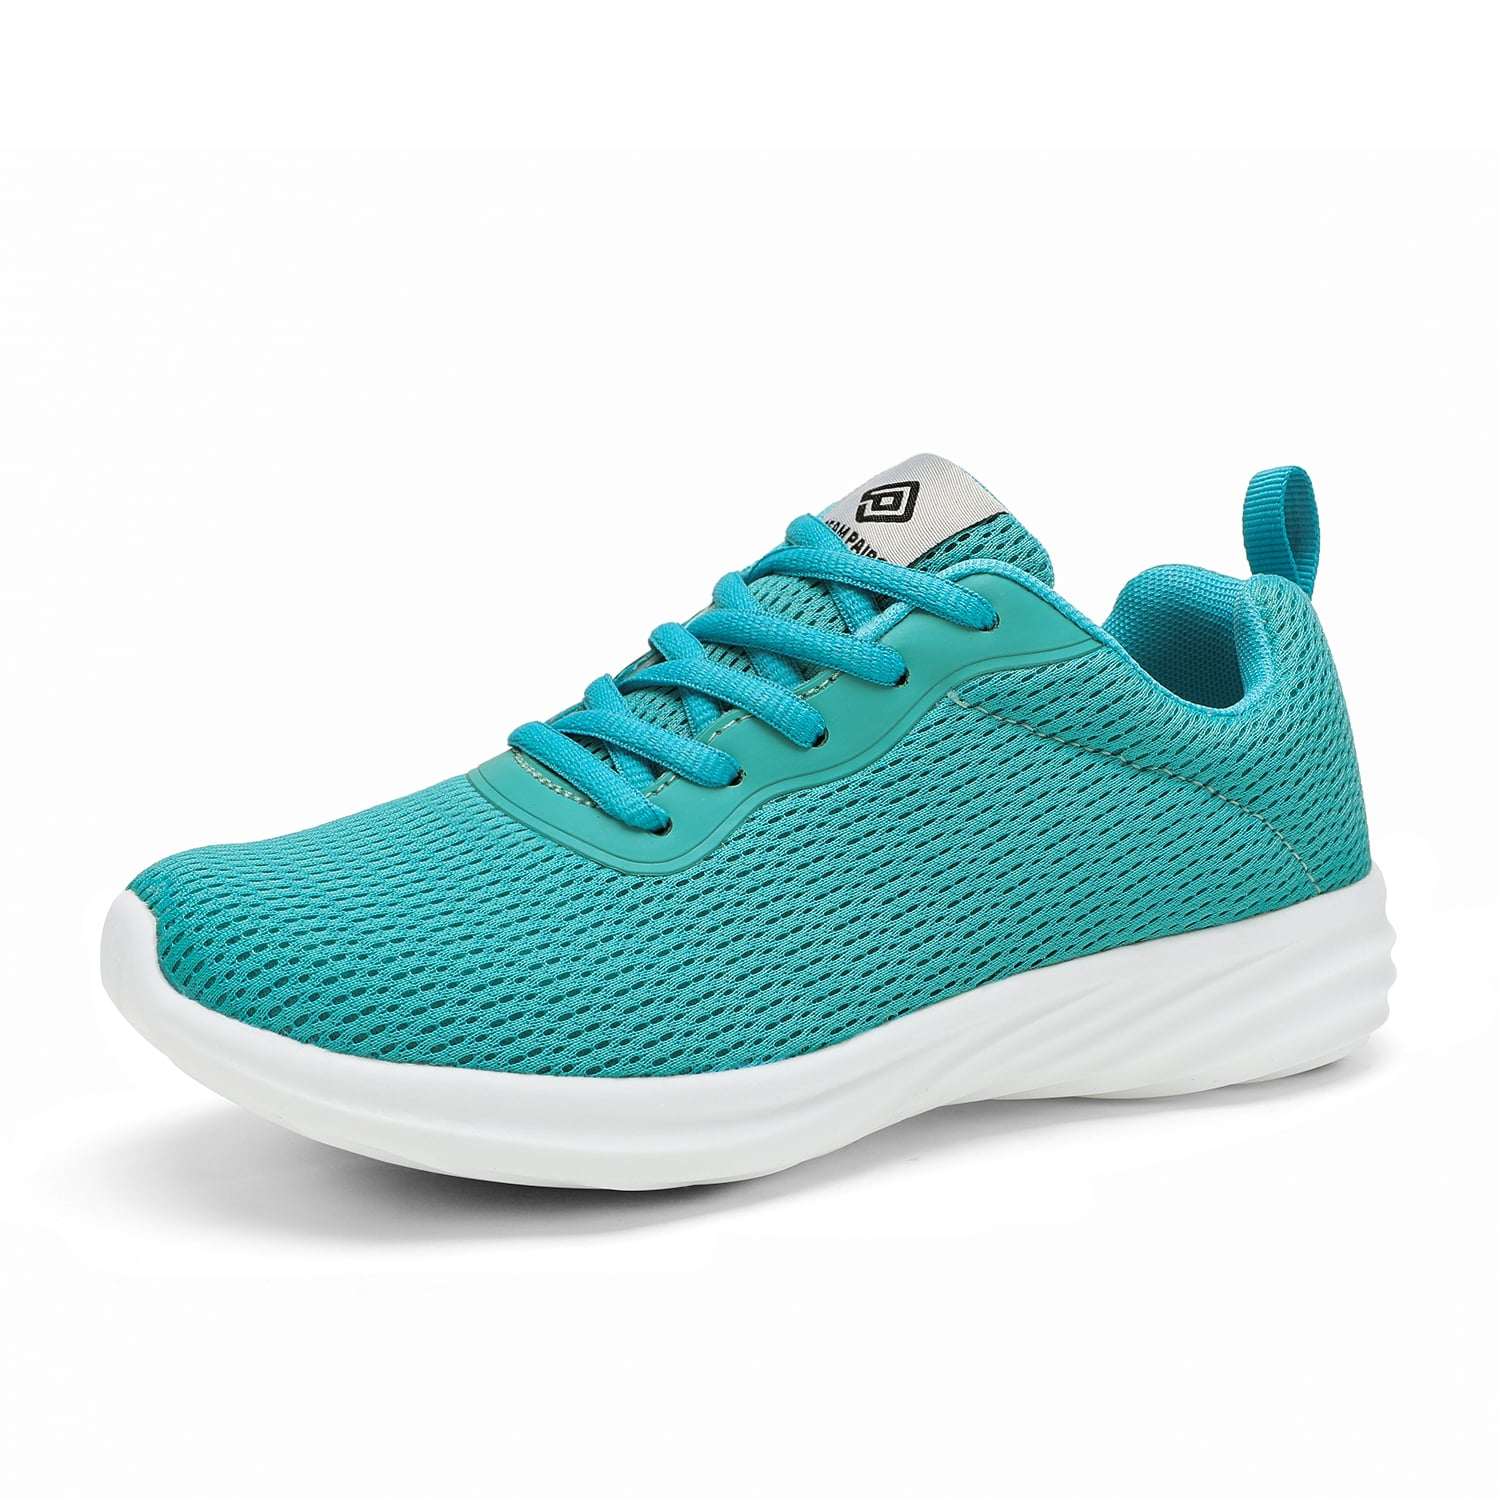 light blue mesh sport shoes